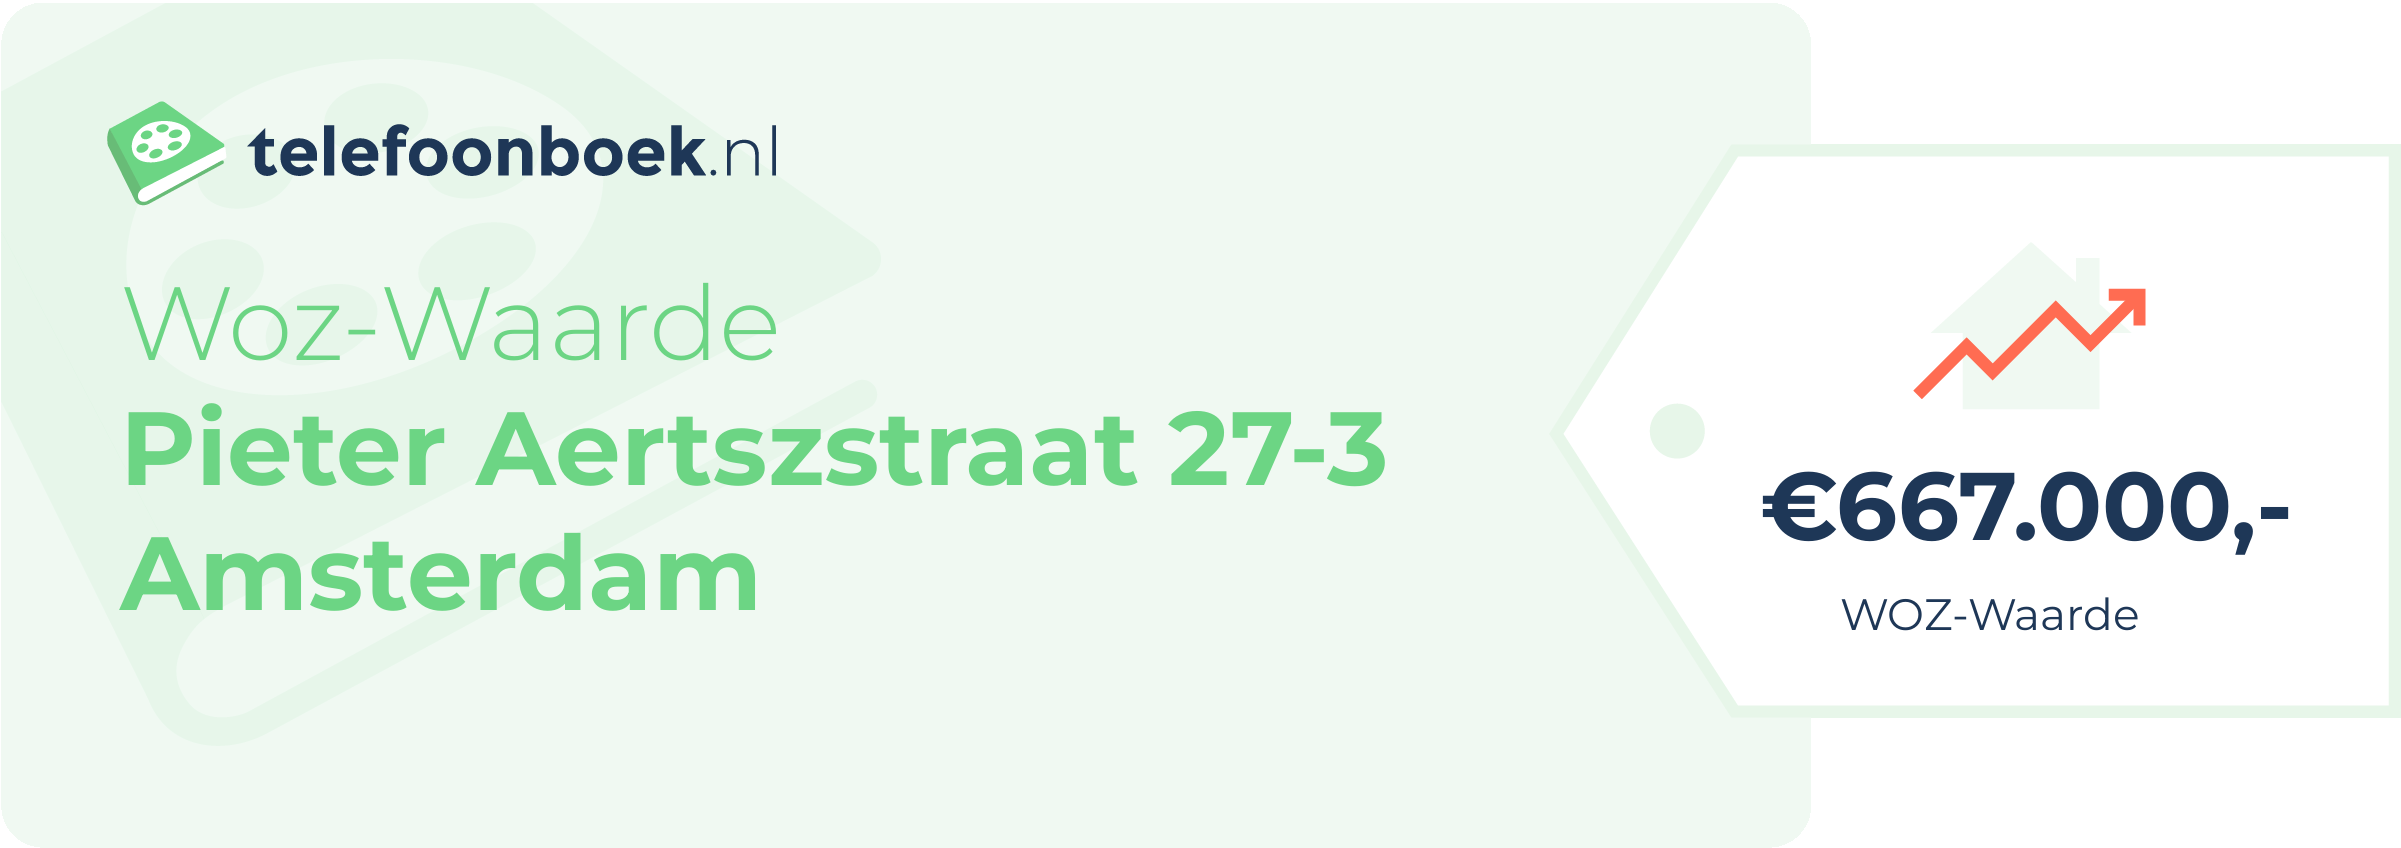 WOZ-waarde Pieter Aertszstraat 27-3 Amsterdam